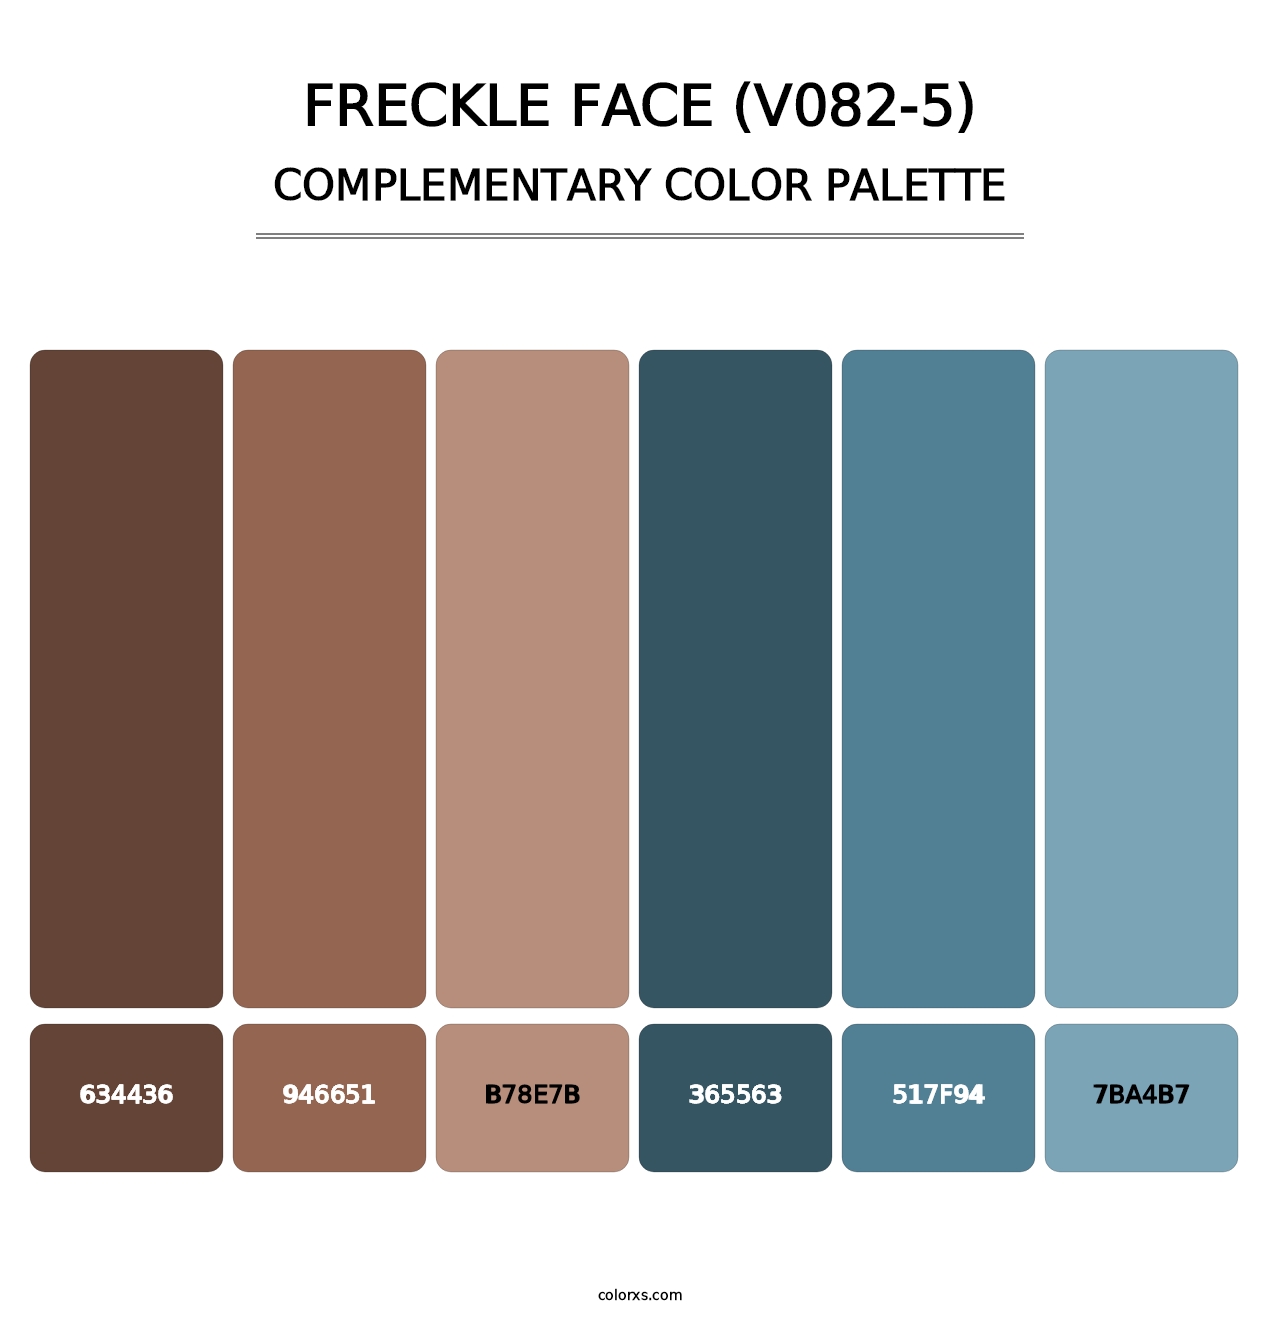 Freckle Face (V082-5) - Complementary Color Palette